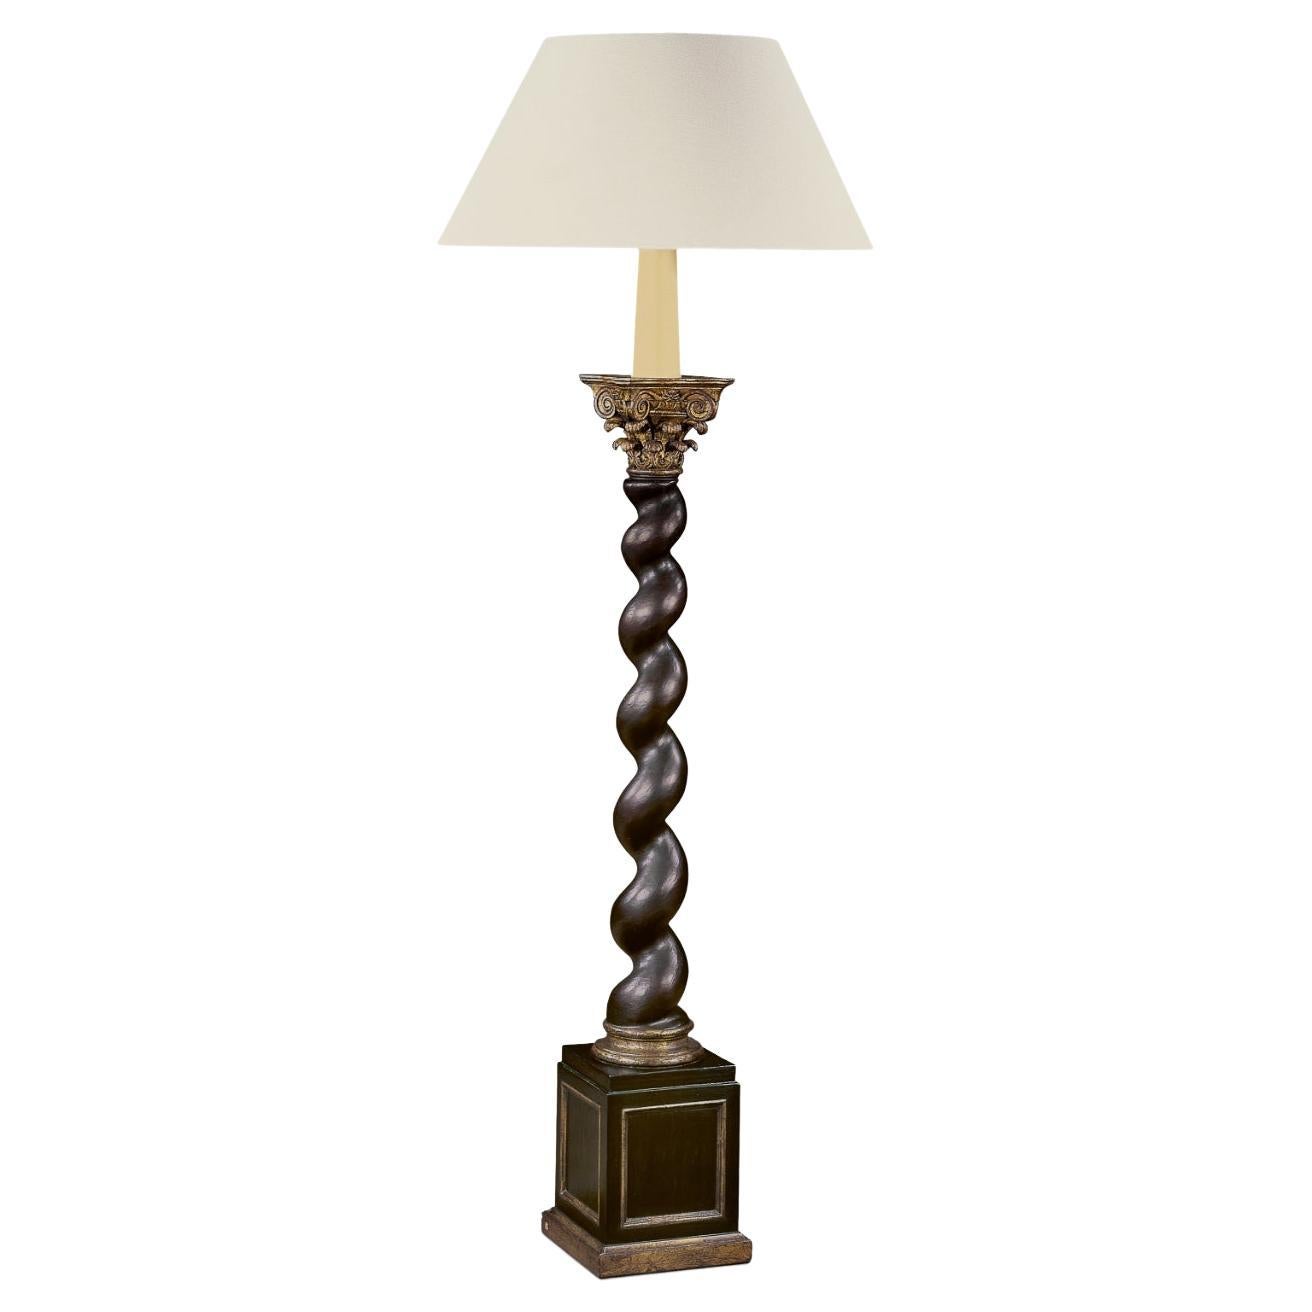 Salomonic Twist Lamp Inspired by Columns with Twisted Shaft & Corinthian Capital